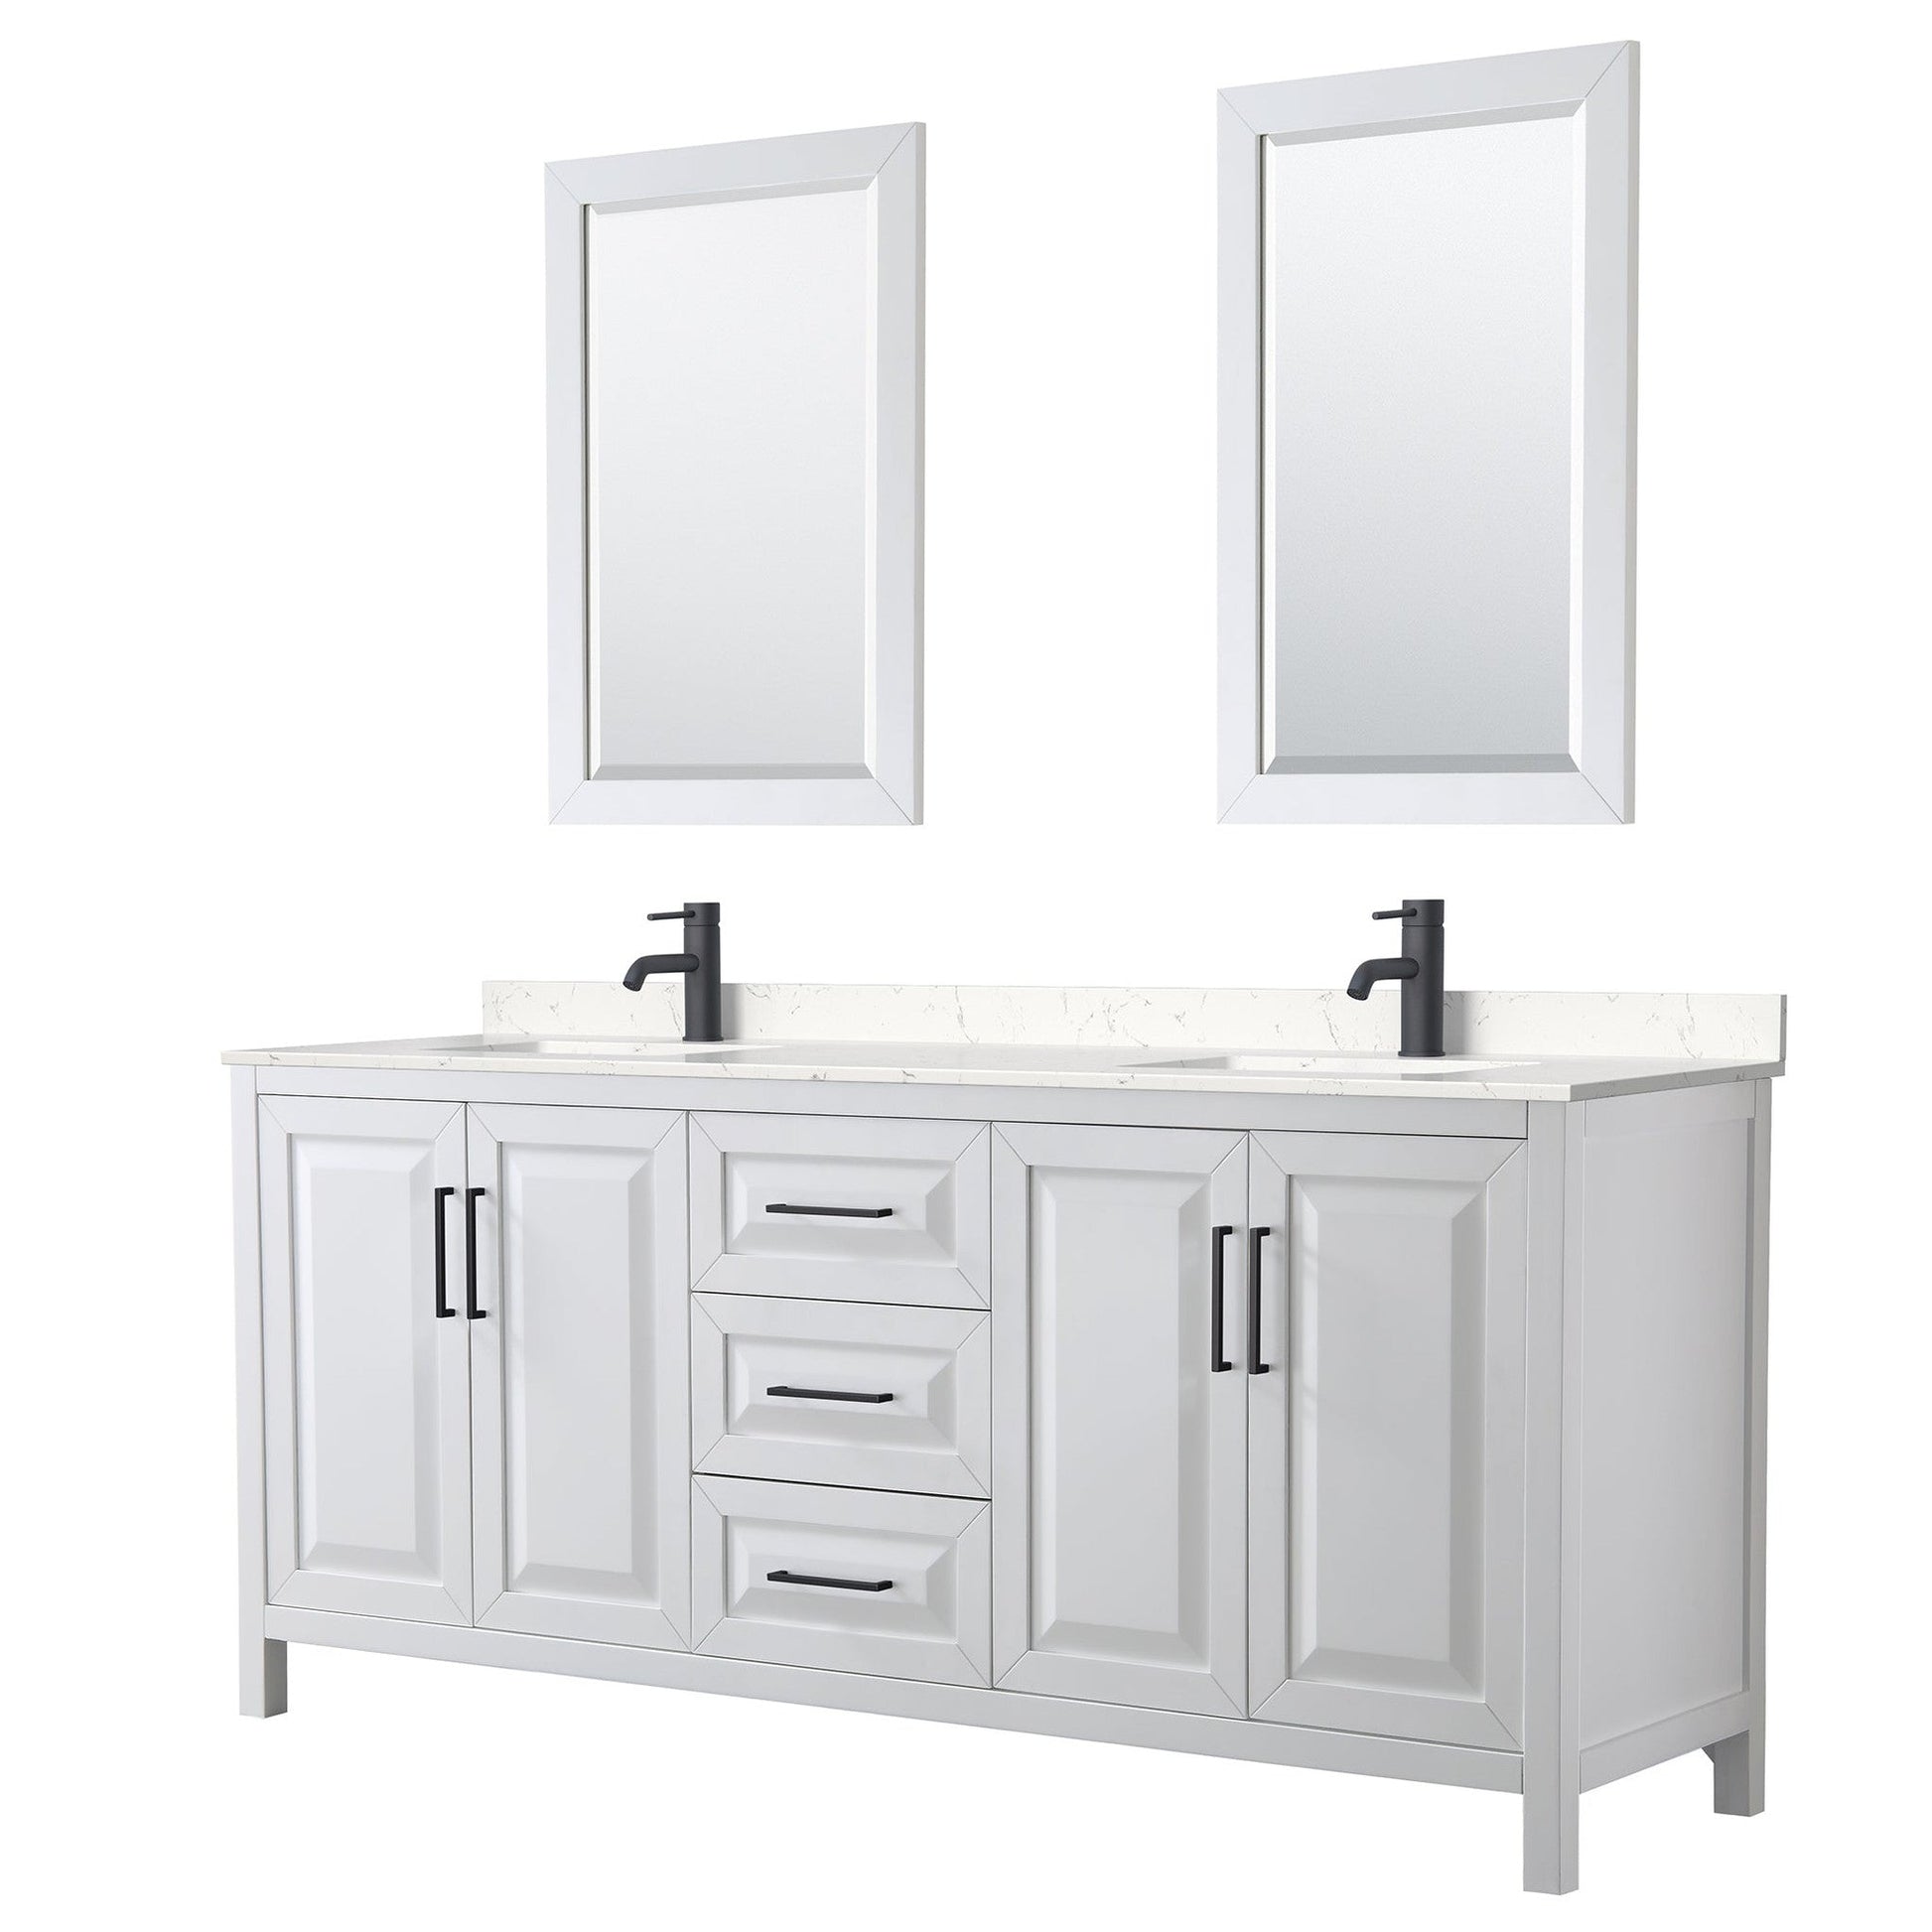 Daria 80" Double Bathroom Vanity in White, Carrara Cultured Marble Countertop, Undermount Square Sinks, Matte Black Trim, 24" Mirrors